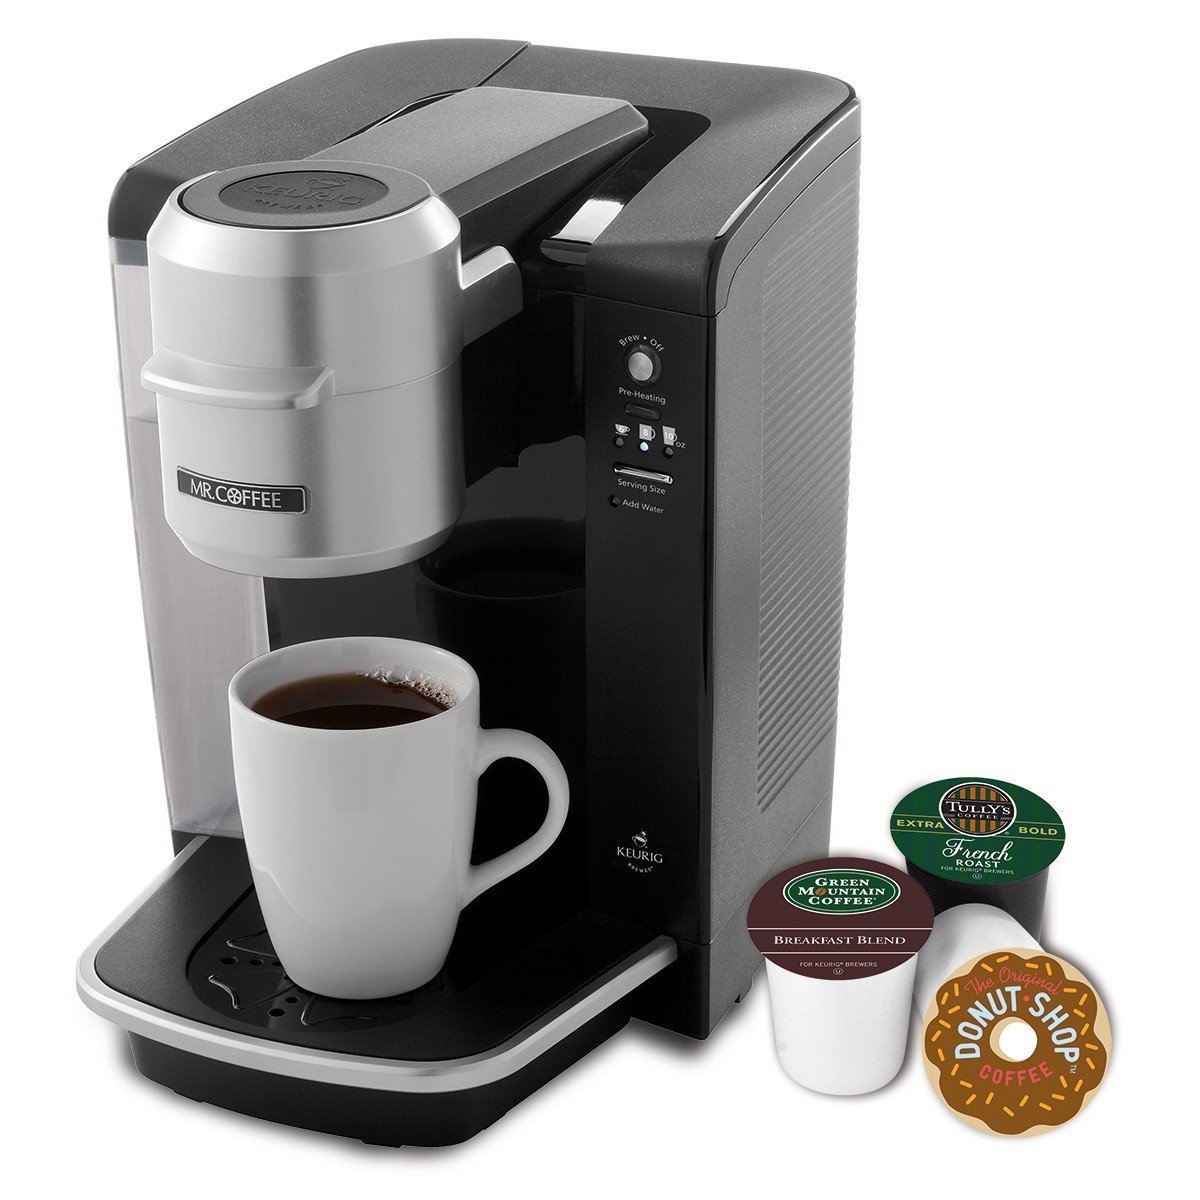 OneBrew Coffee & Tea Maker Review